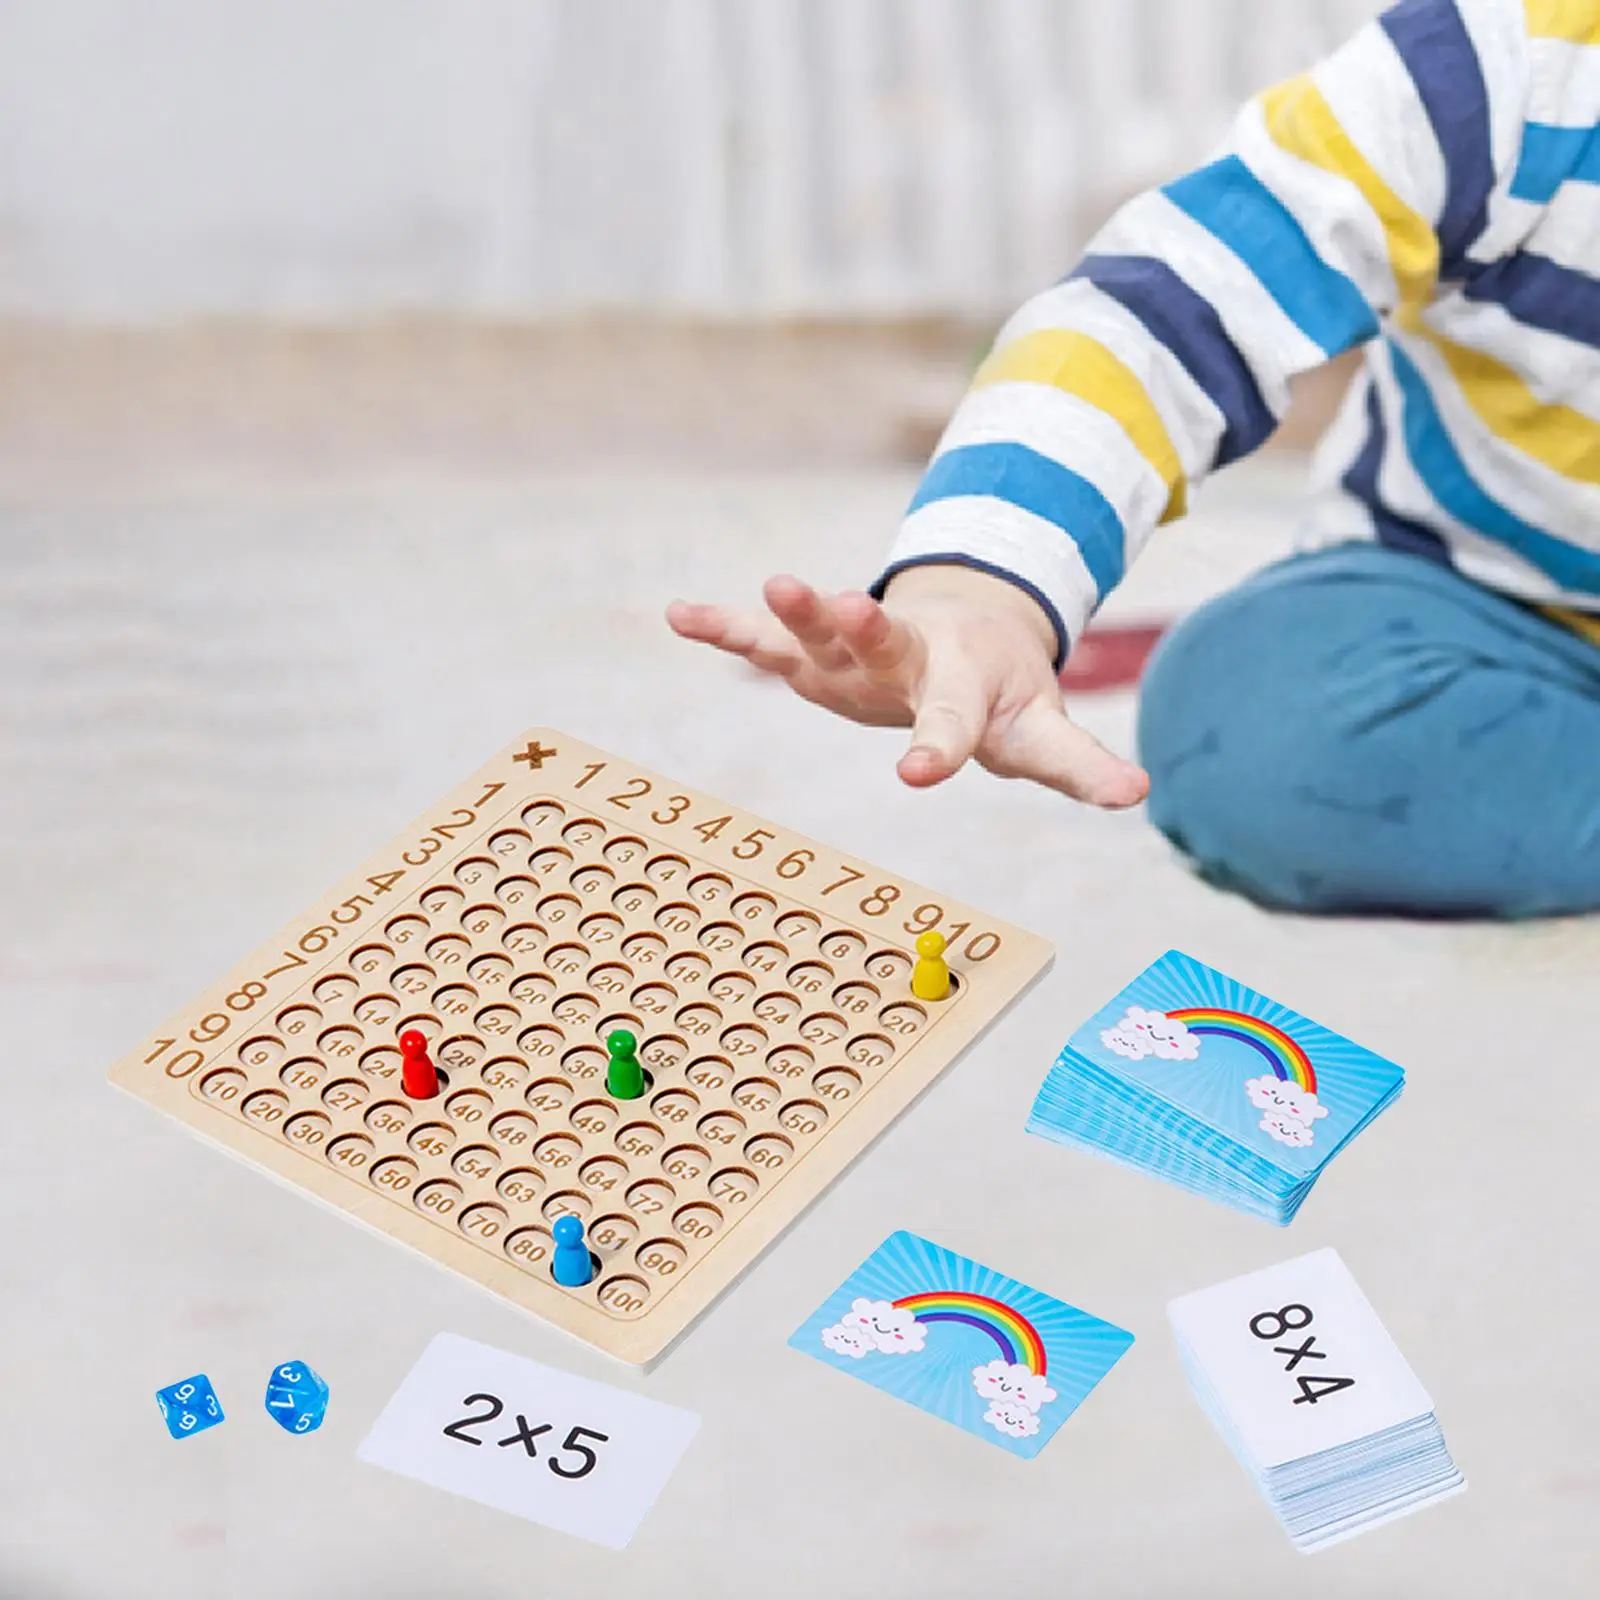 9x9 Multiplication Board Wooden Montessori Math Educational Multiplication Table Board Game for Livng Room Home Children Unisex